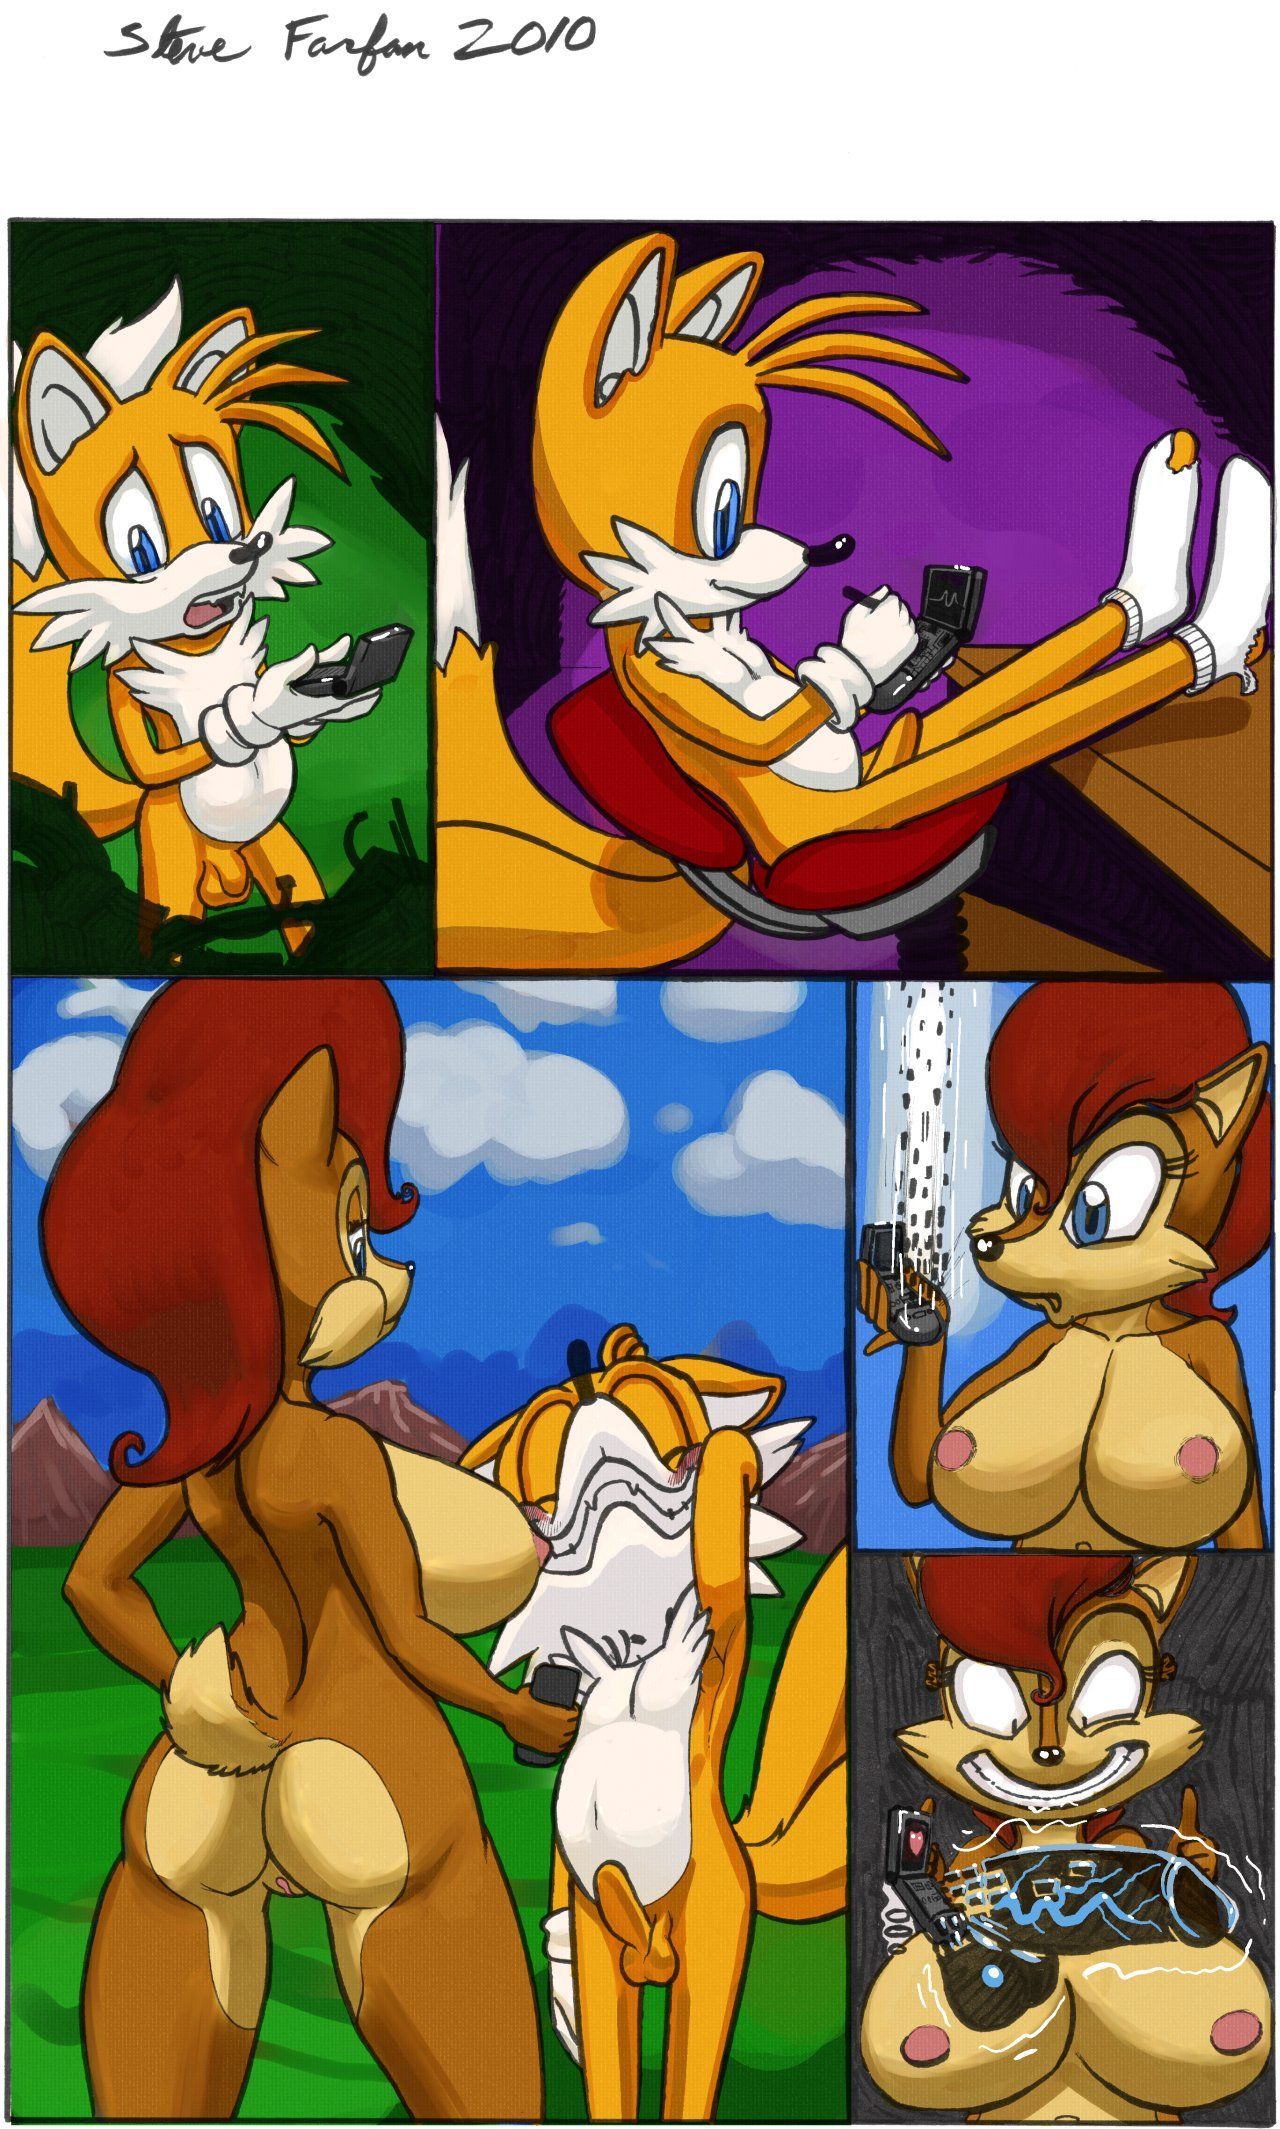 Sonic having sex with sally